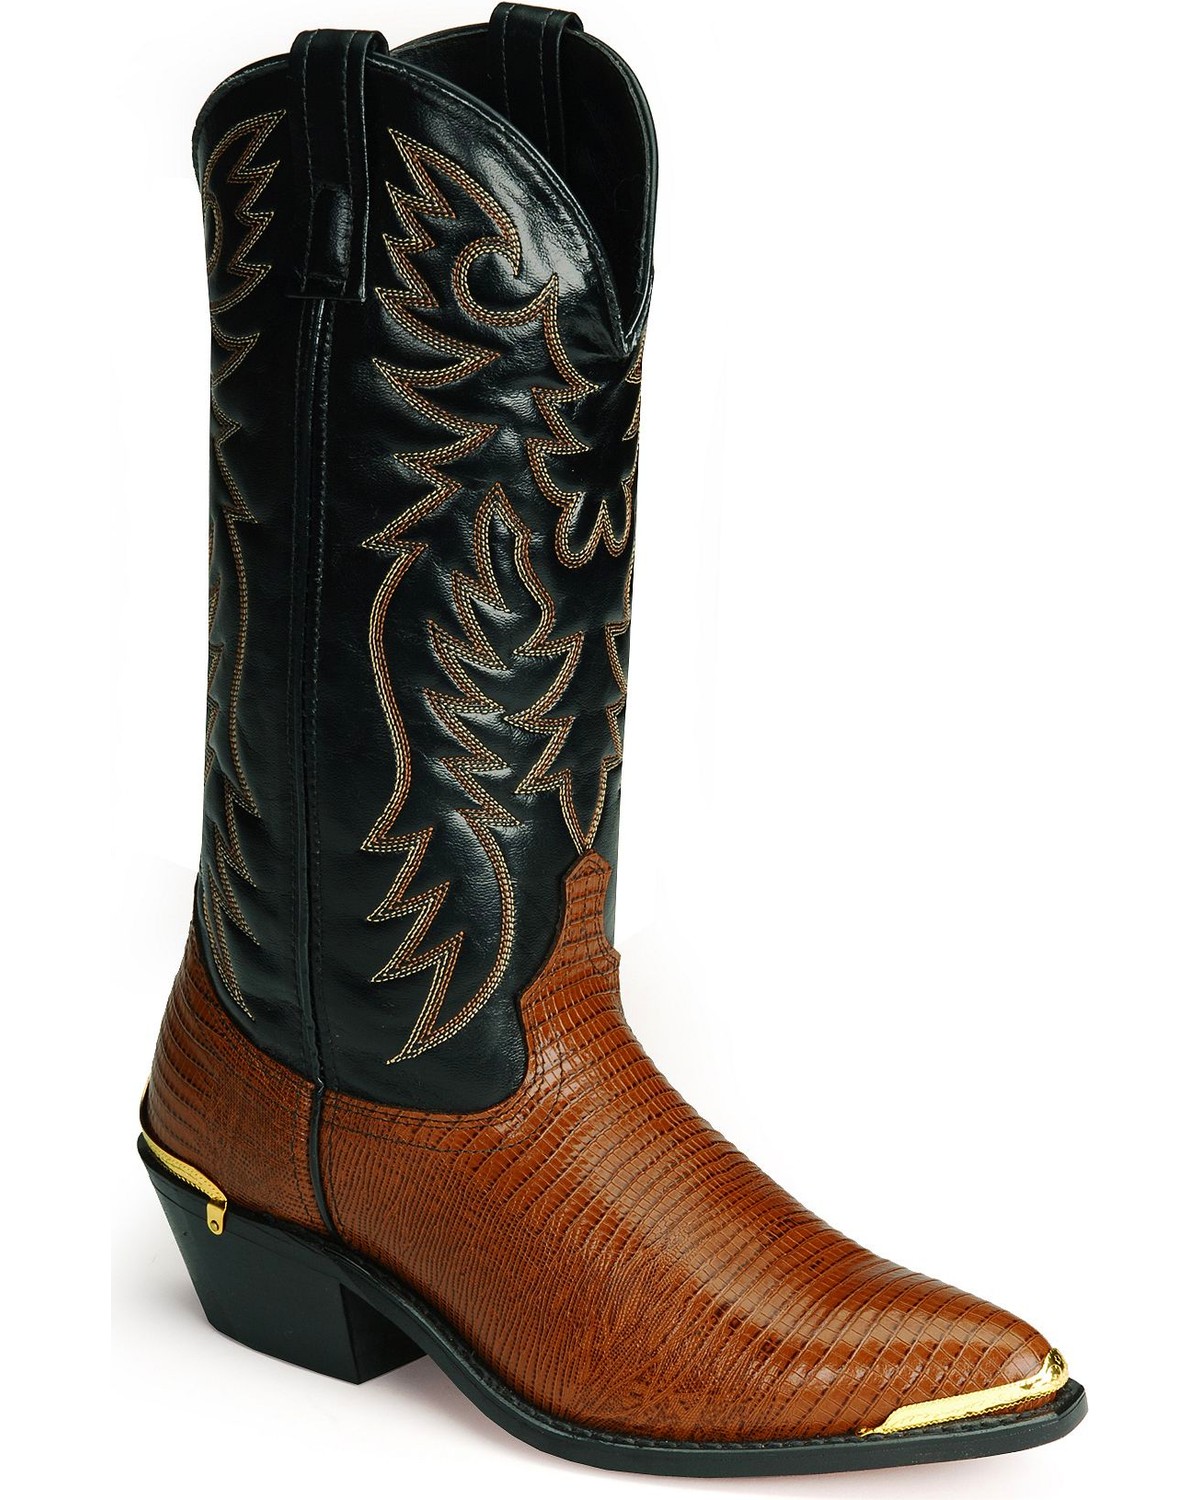 Laredo Men's Lizard Print Western Boots - Snip Toe